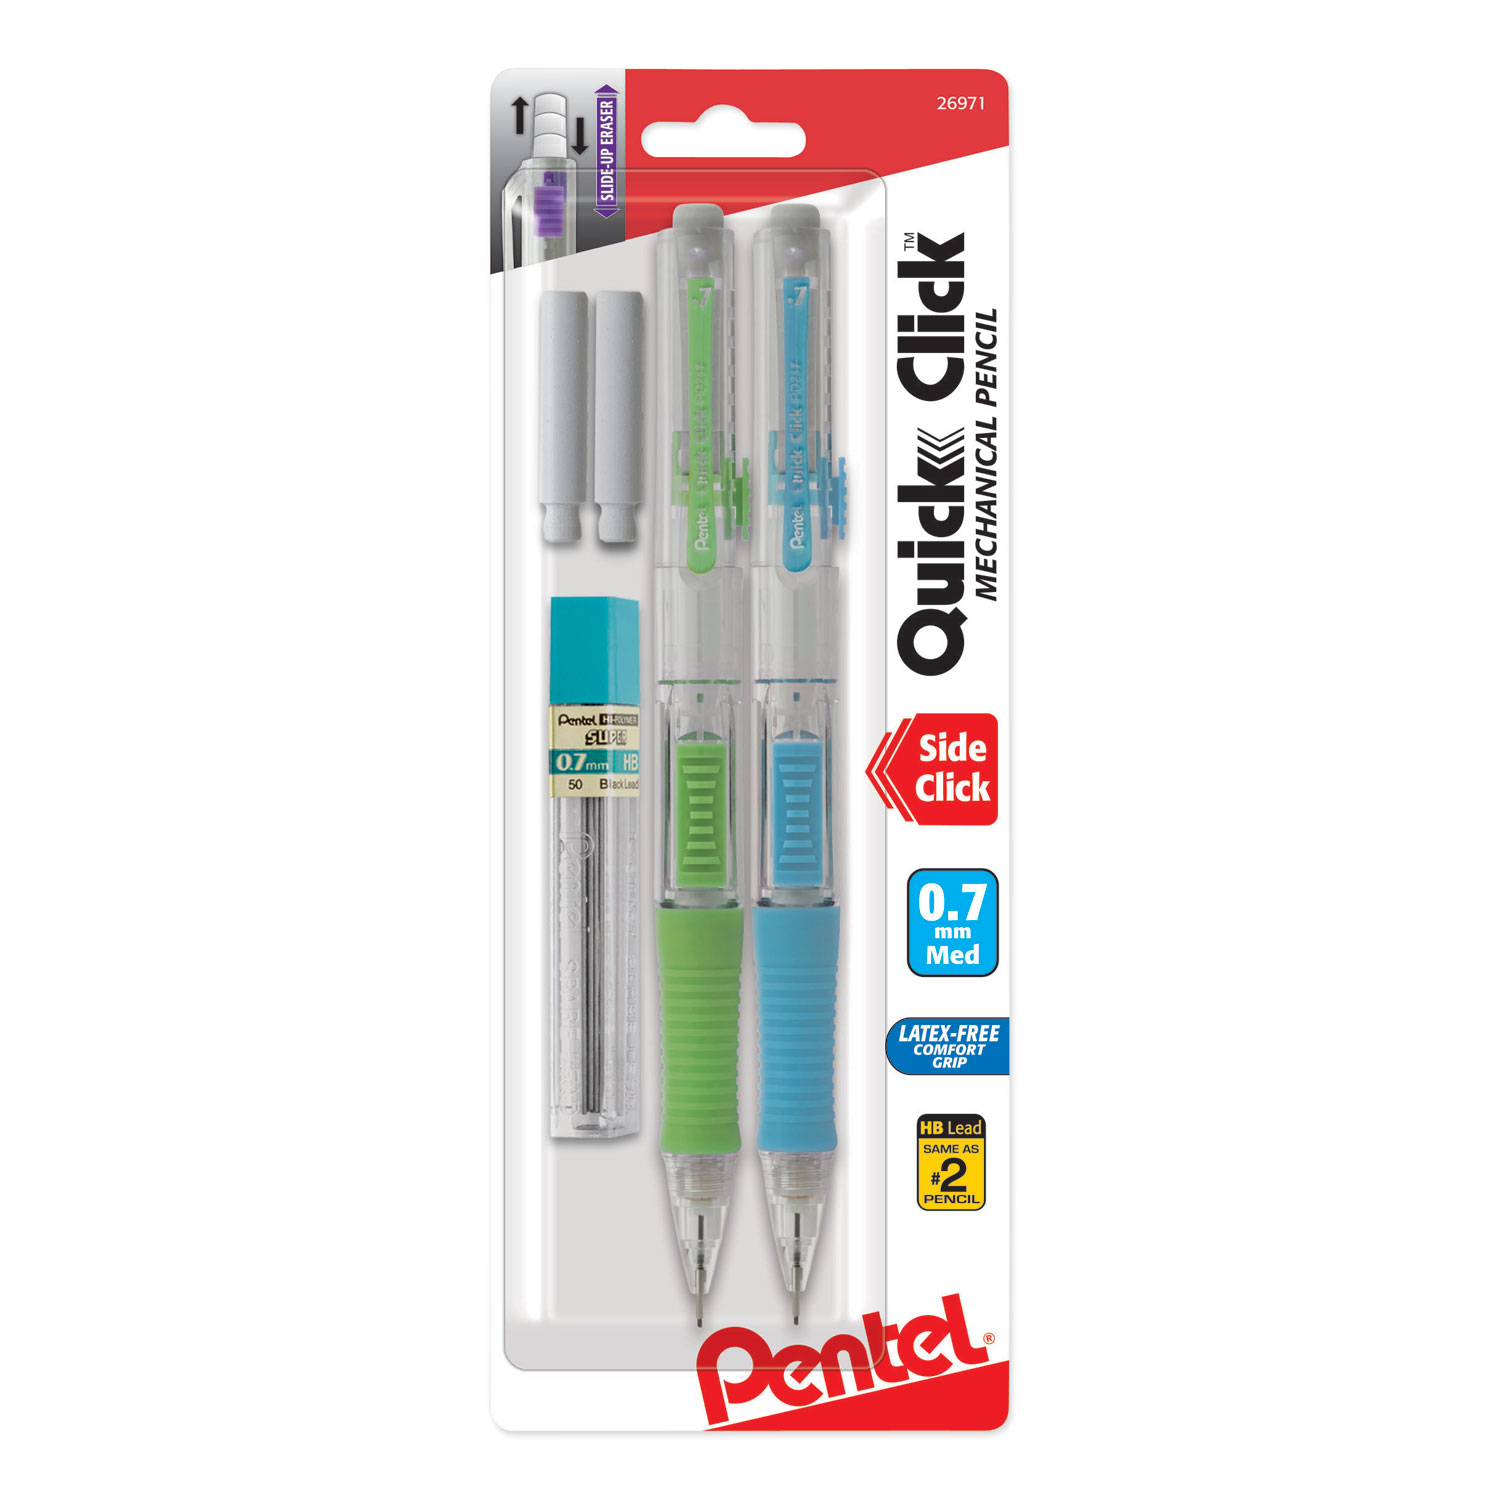  Pentel PD217LEBP2 QUICK CLICK Mechanical Pencil, 0.7 mm, HB (#2.5), Black Lead, Assorted Barrel Colors, 2/Pack (PENPD217LEBP2) 